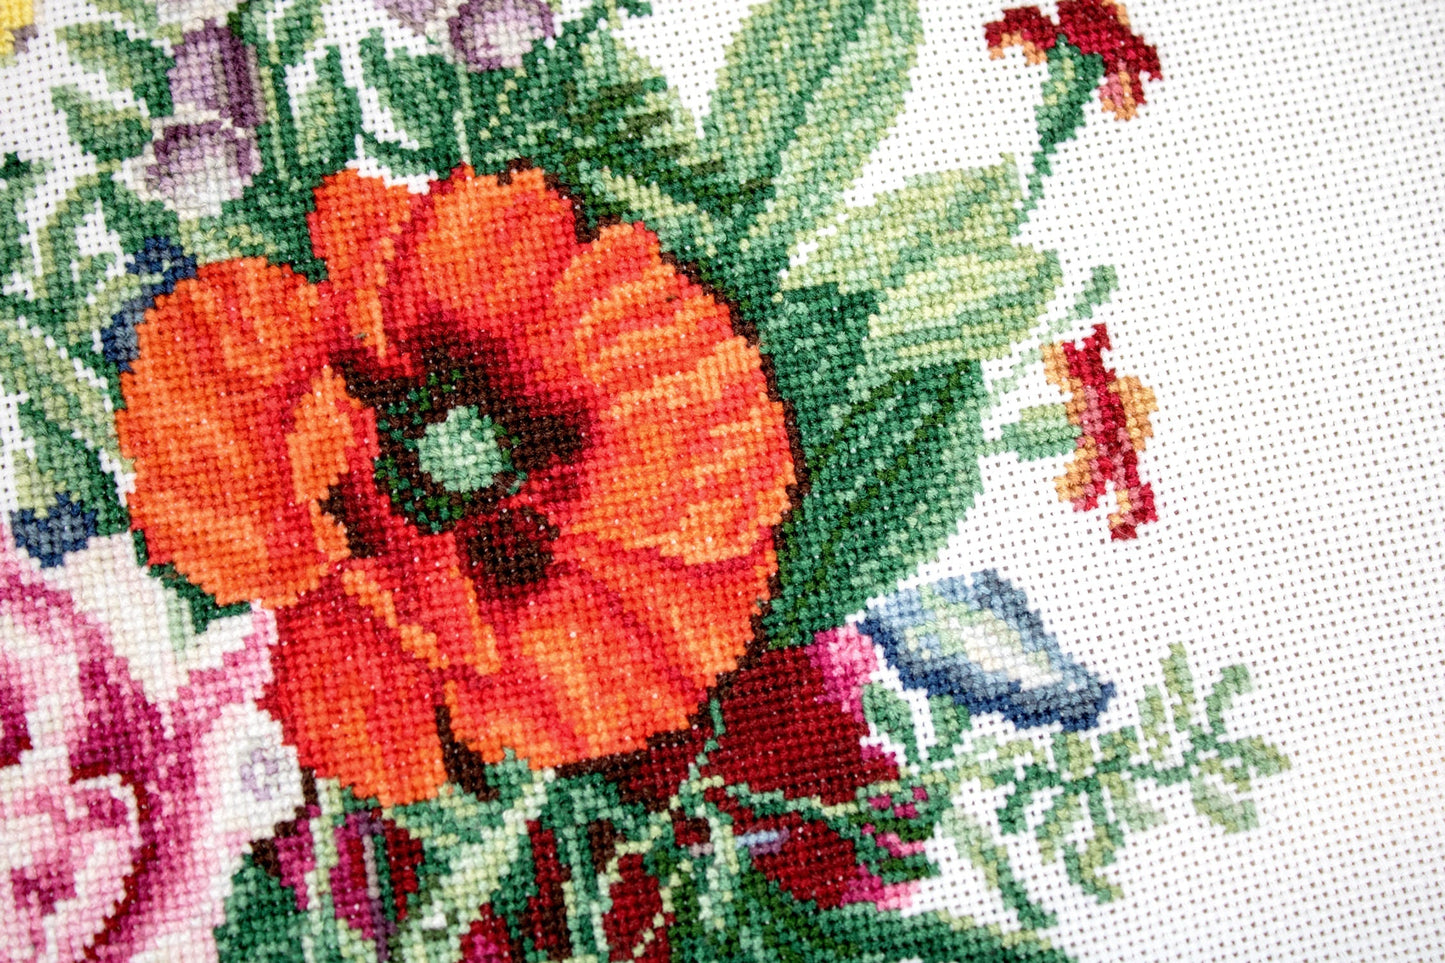 Cross Stitch Kit Luca-S - Bouquet with Poppy and Peony, B2350